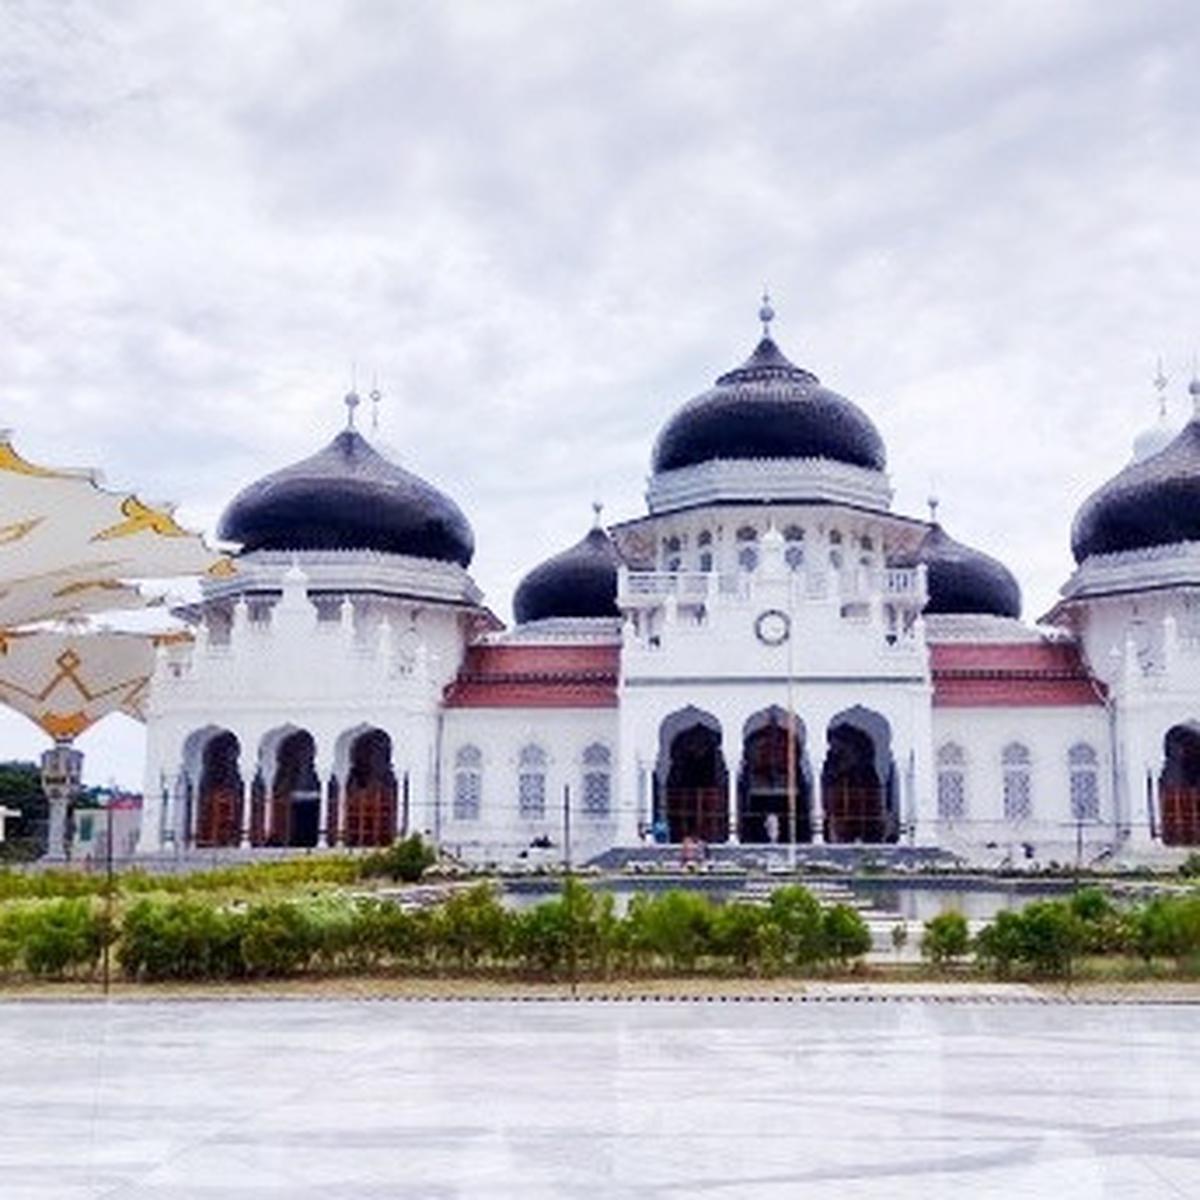 Bangunan masjid yang merupakan hasil akulturasi memiliki ciri-ciri